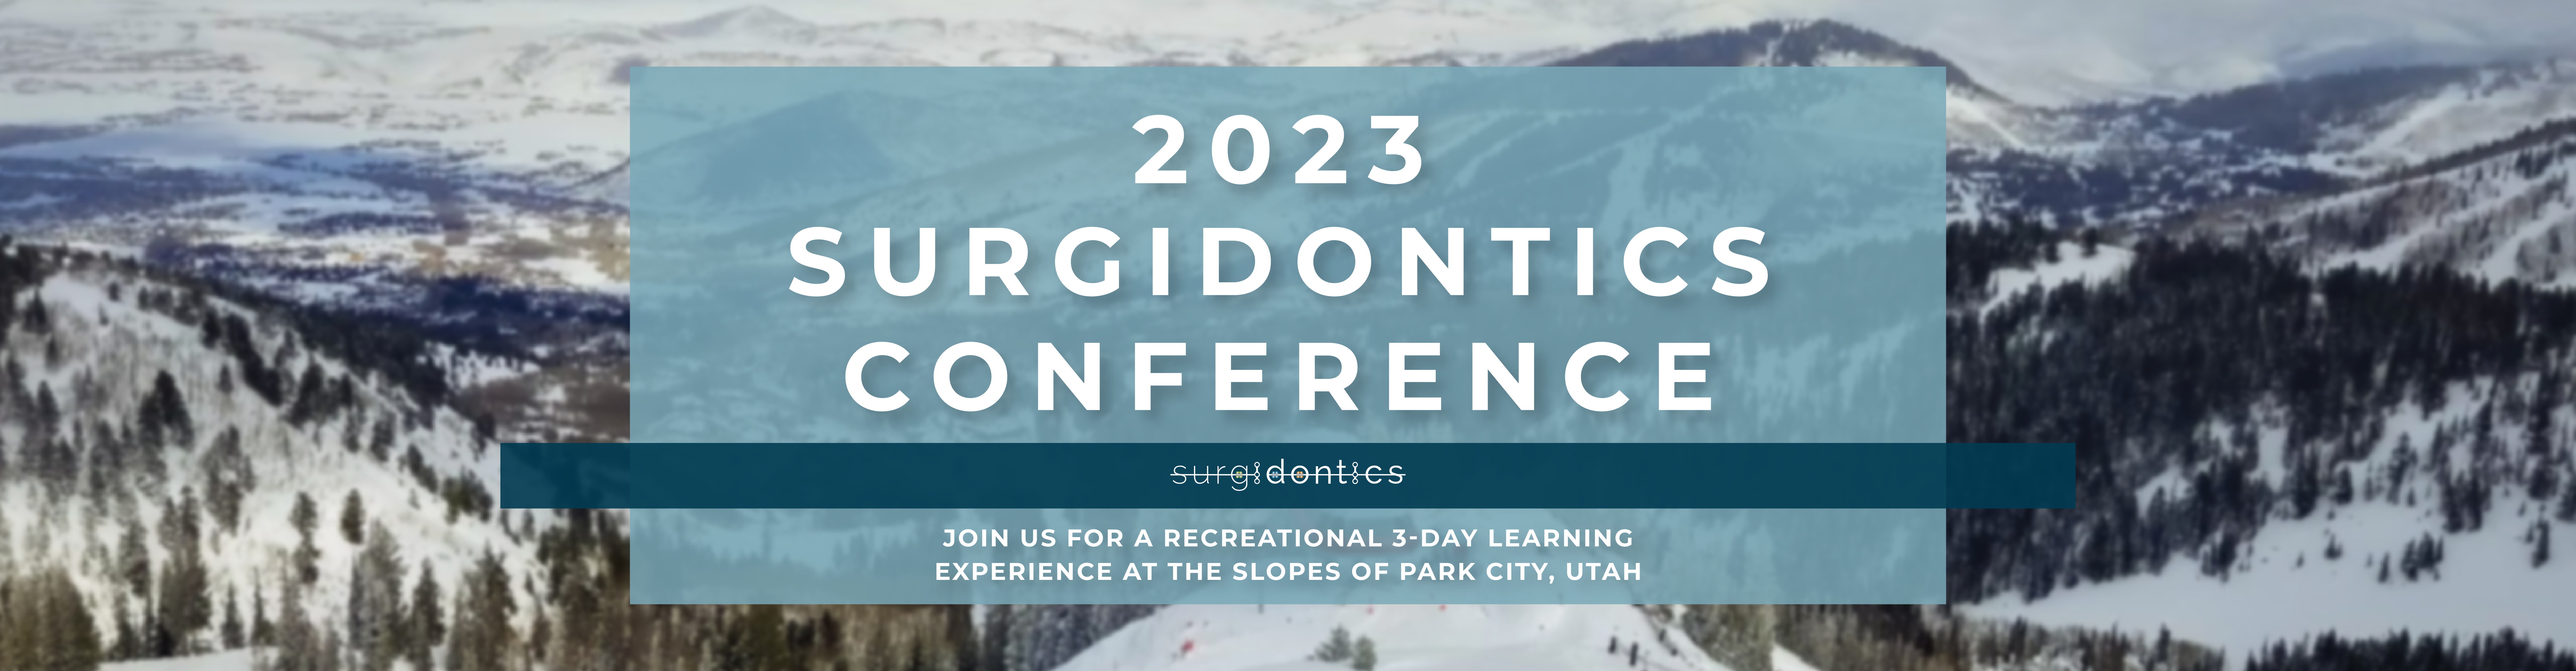 Surgidontics-Conference-2023